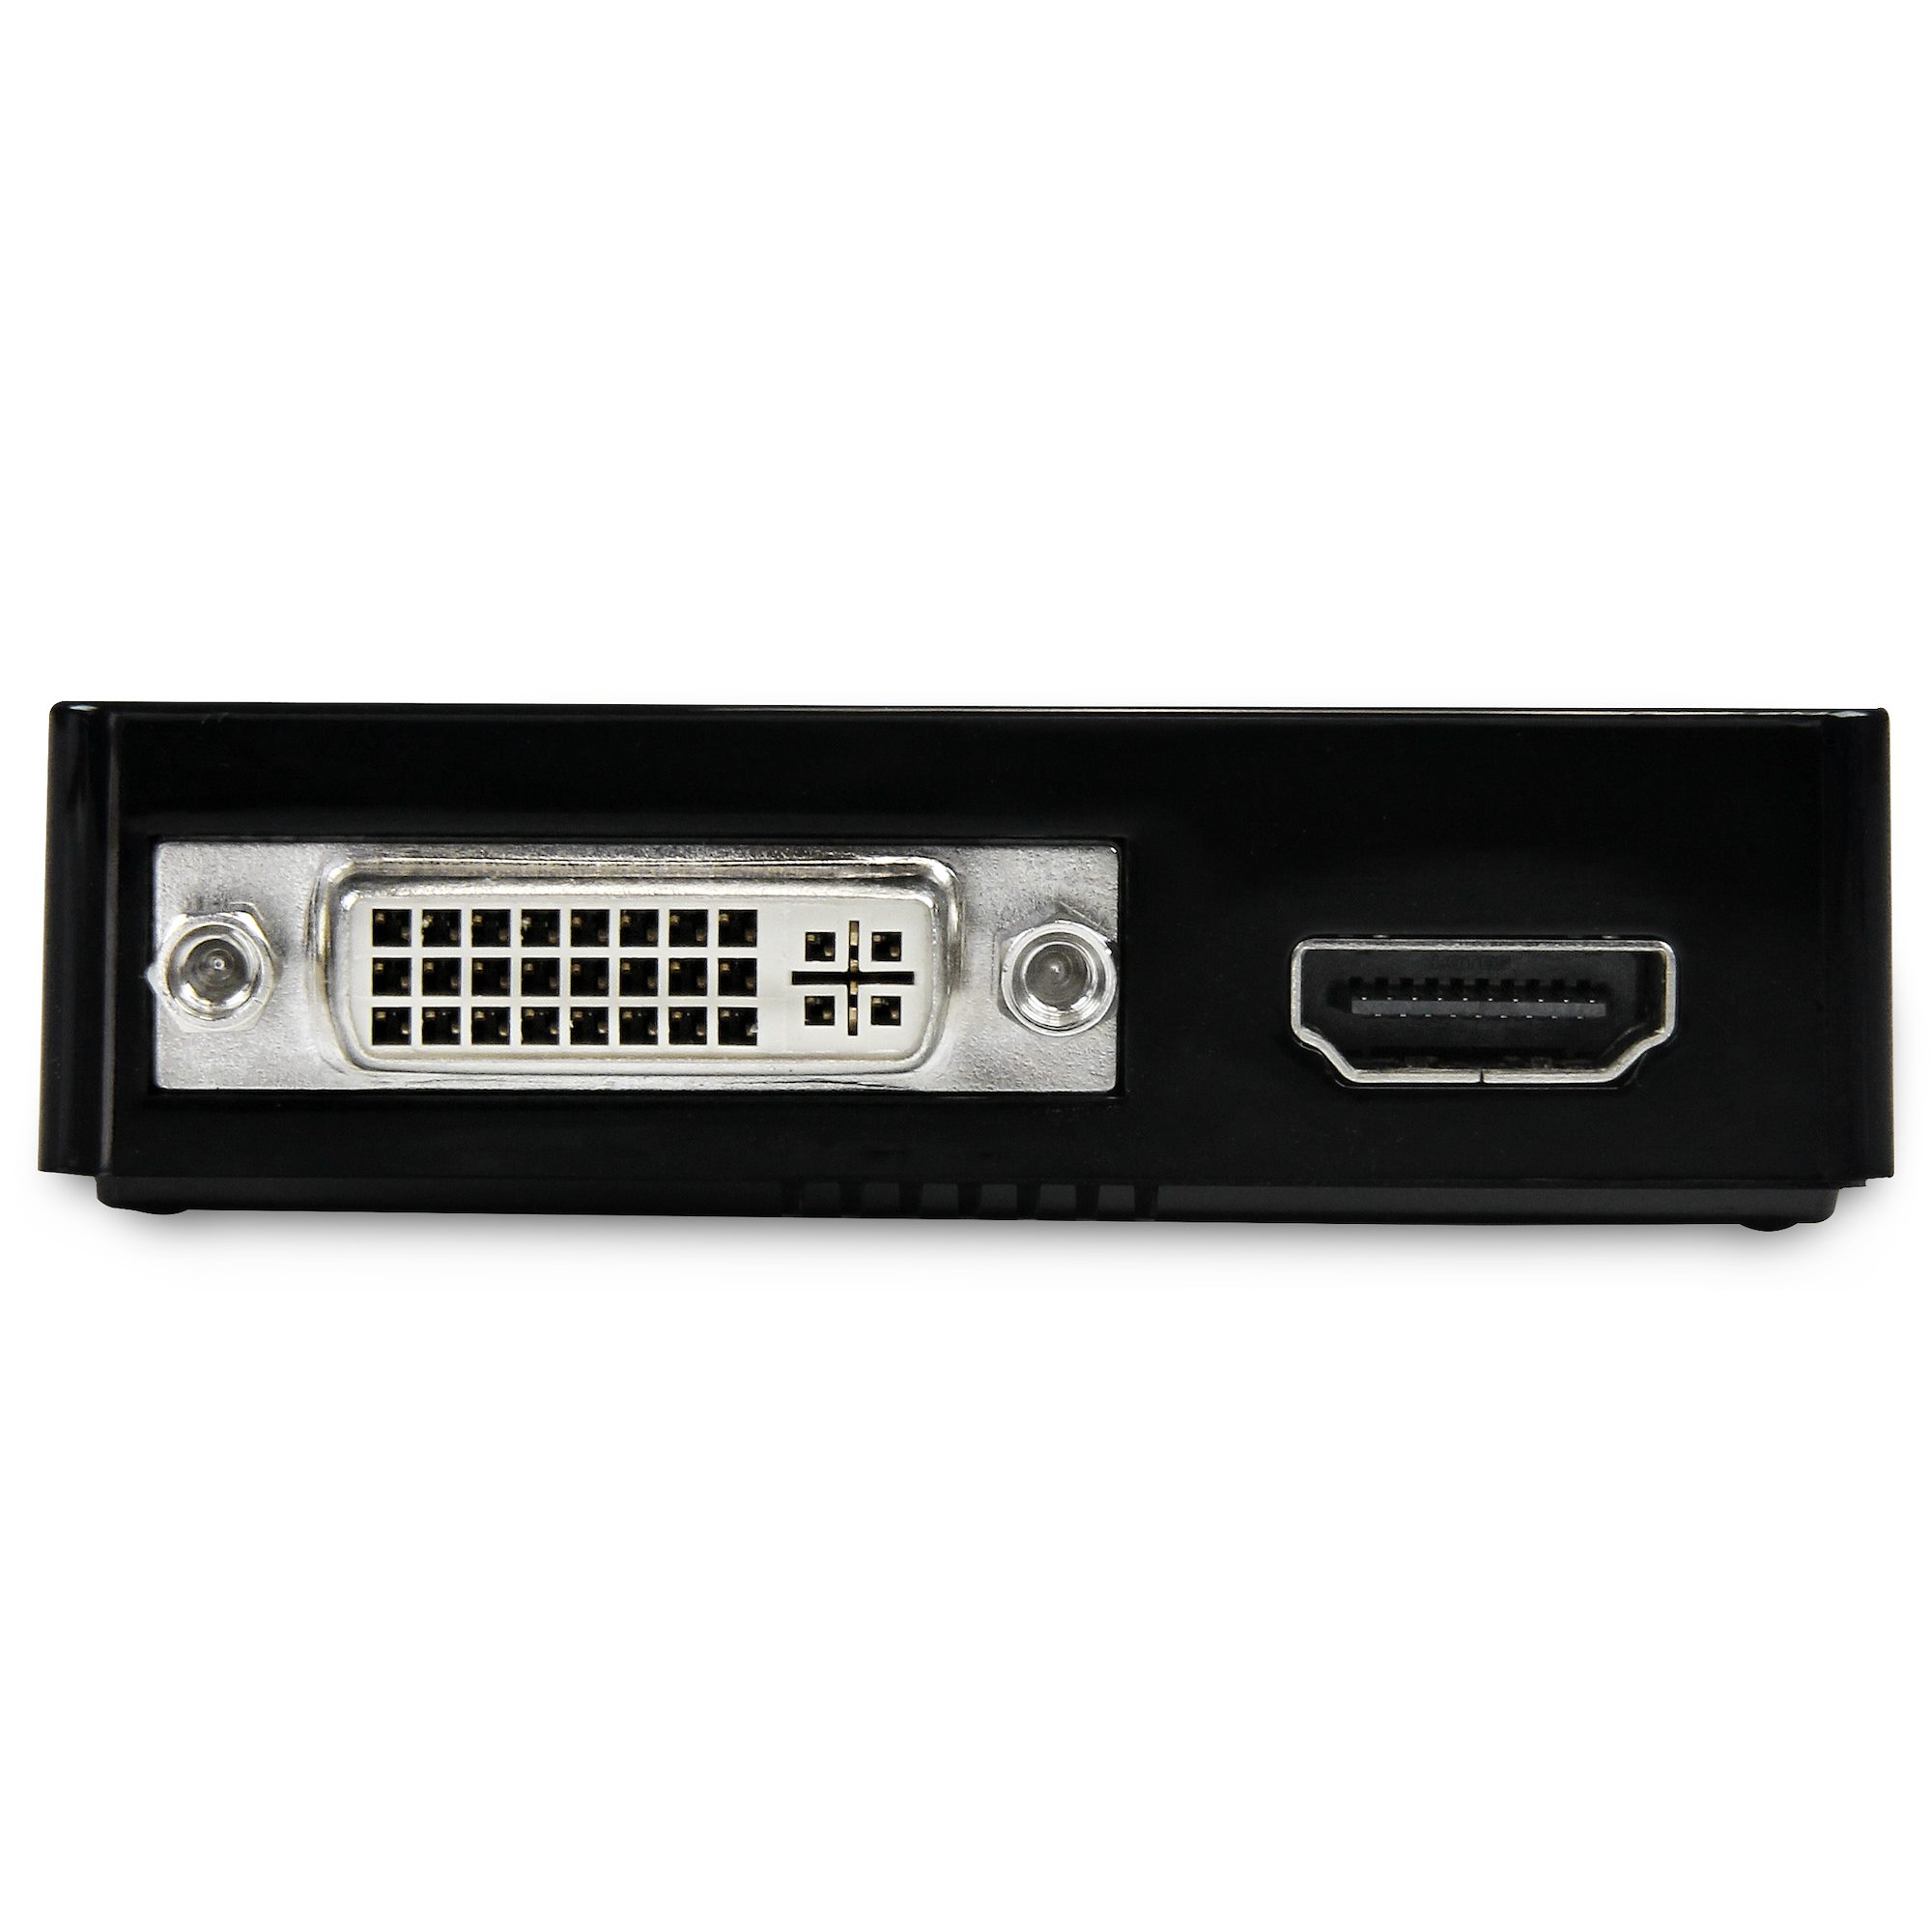 USB 3.0 to HDMI / DVI Adapter - 2048x1152